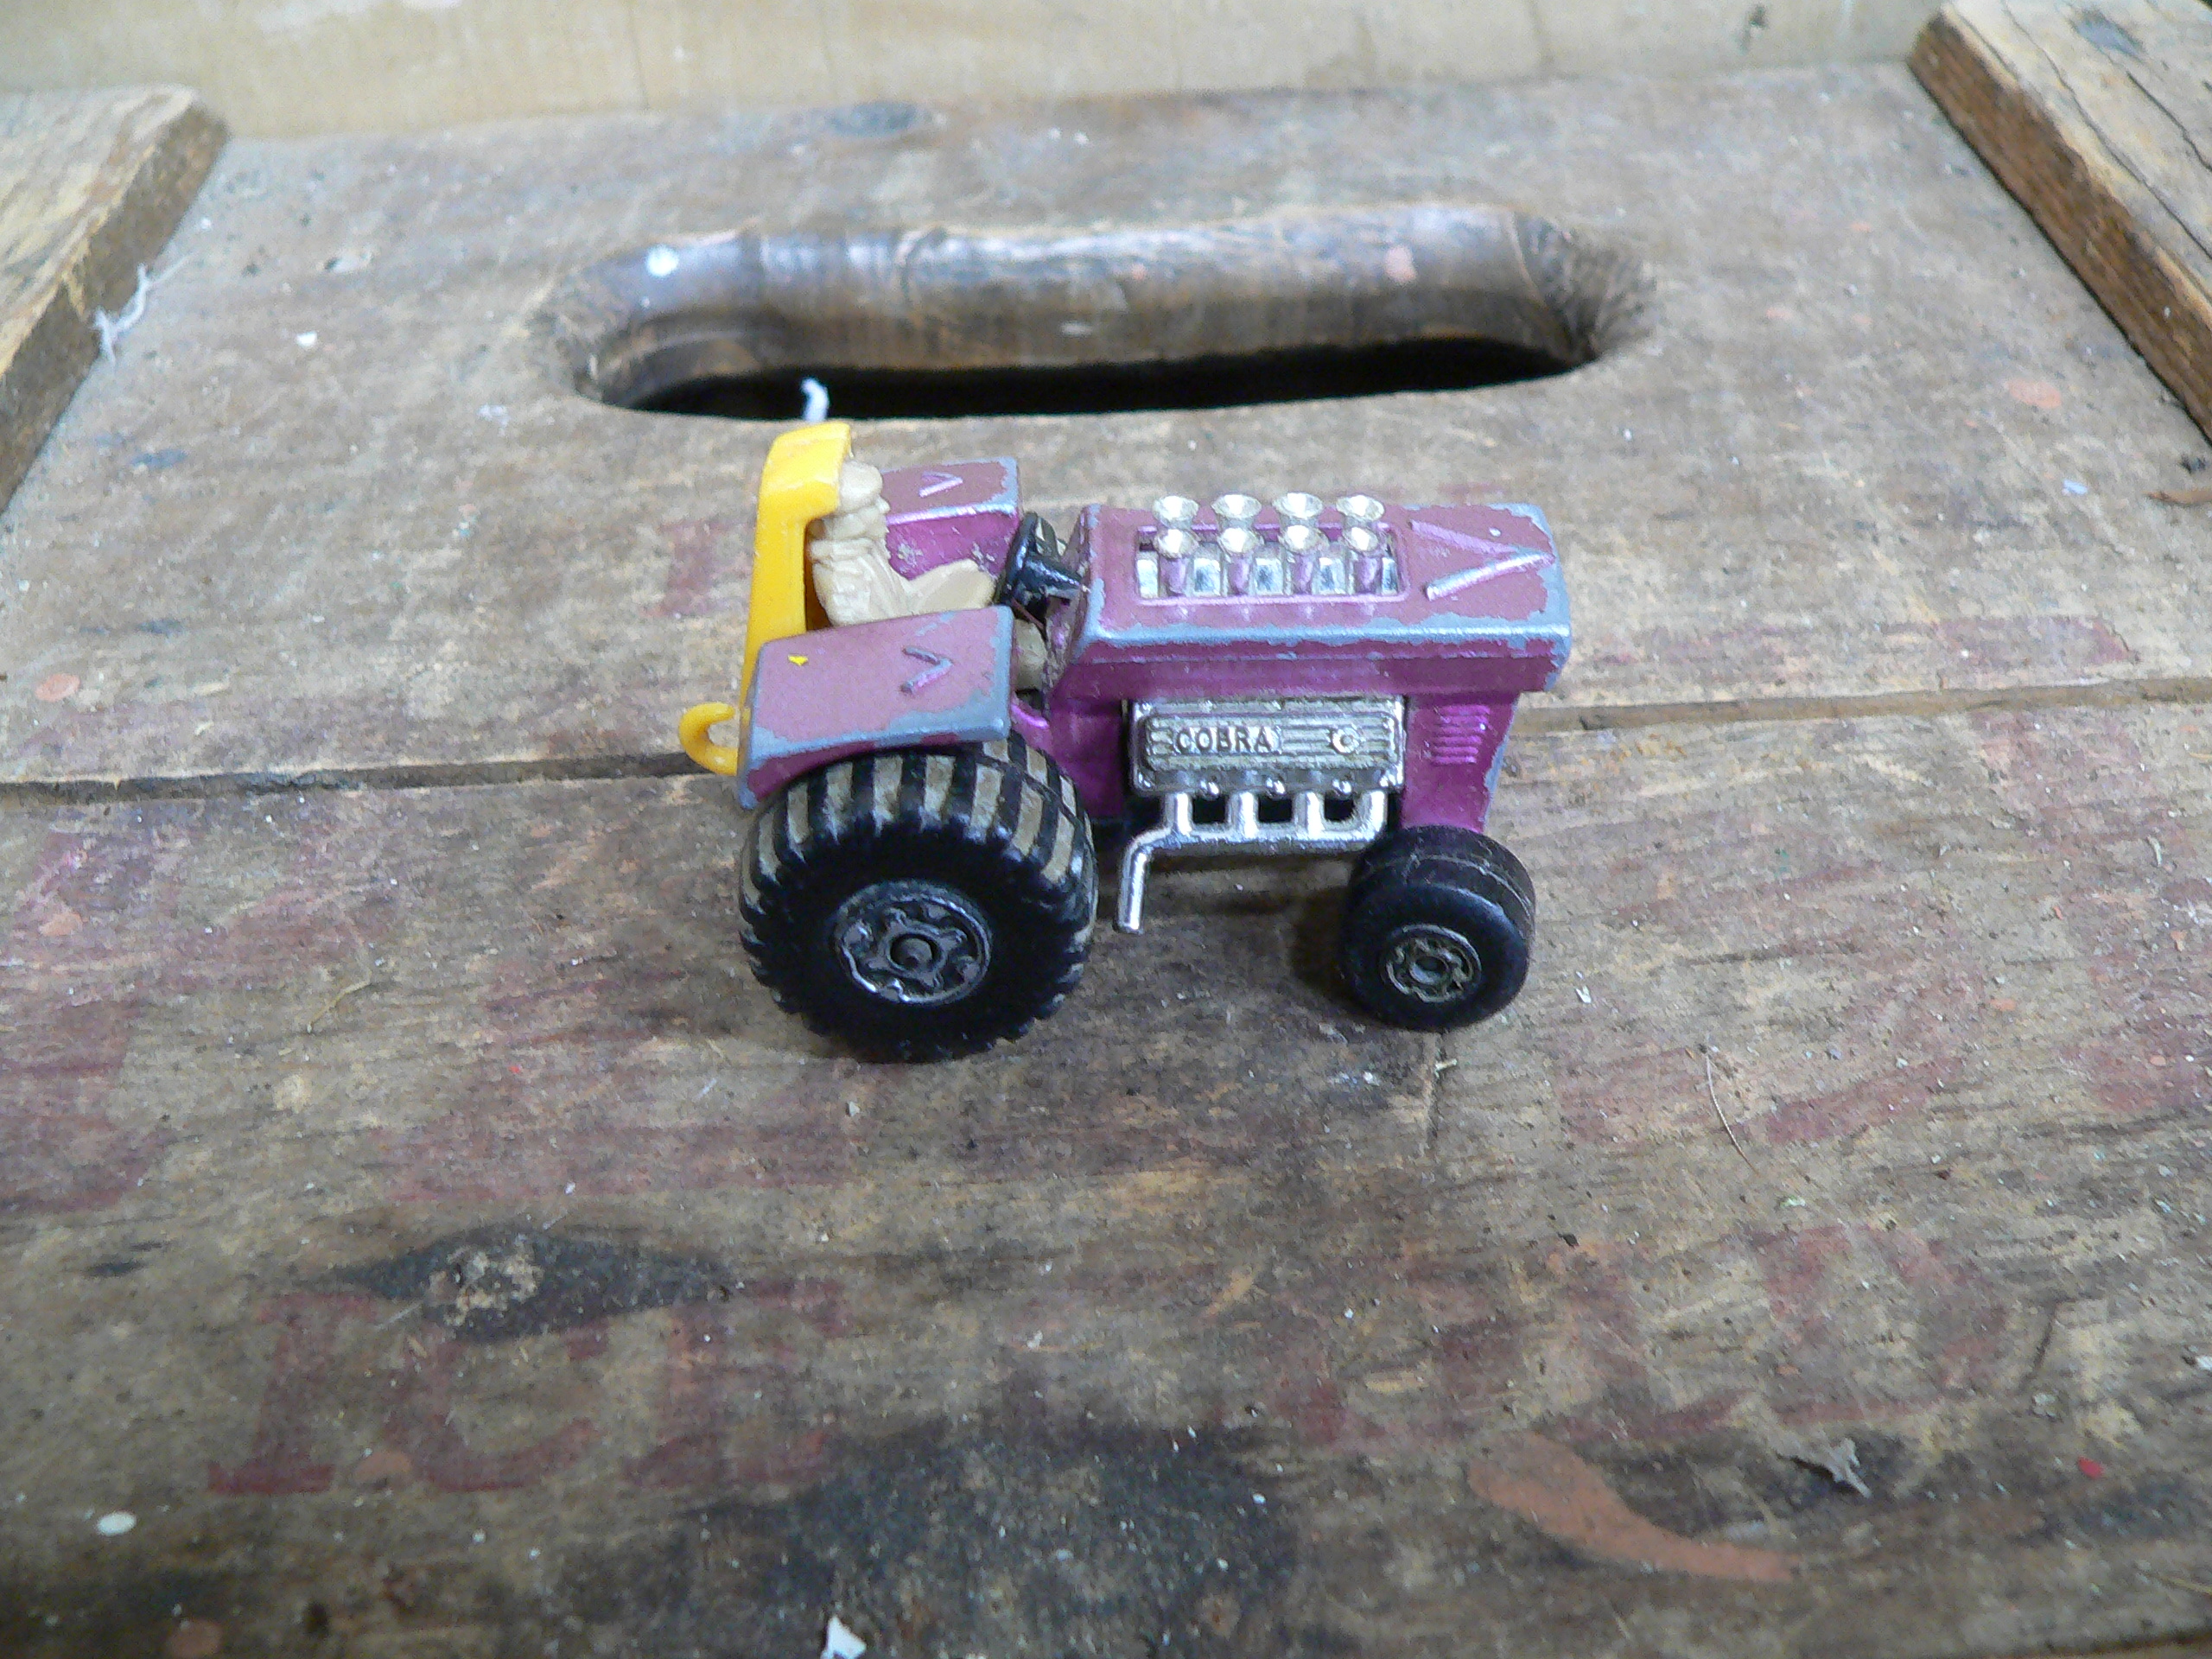 Mod tractor # 6199.1 